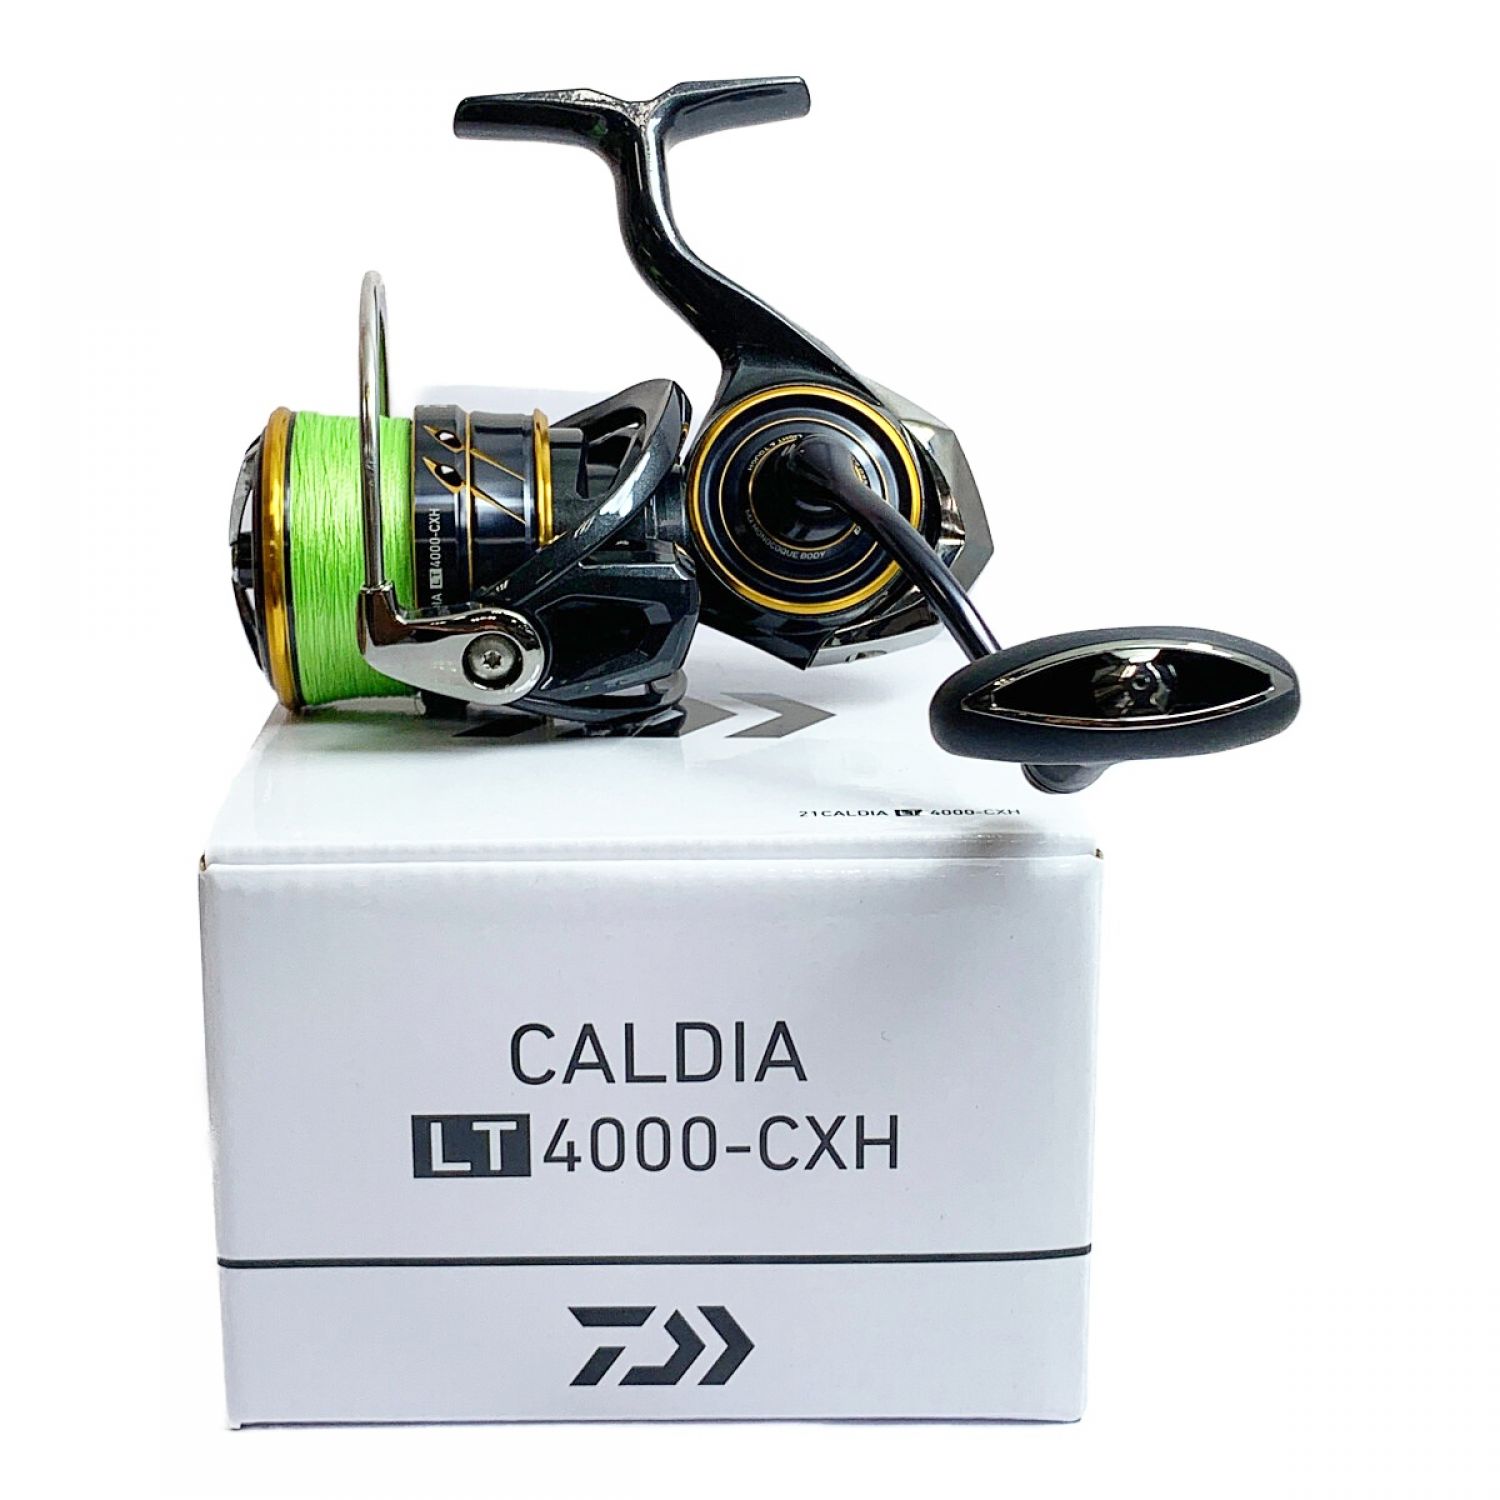 21 CALDIA LT4000-CXH 21カルディア　4000